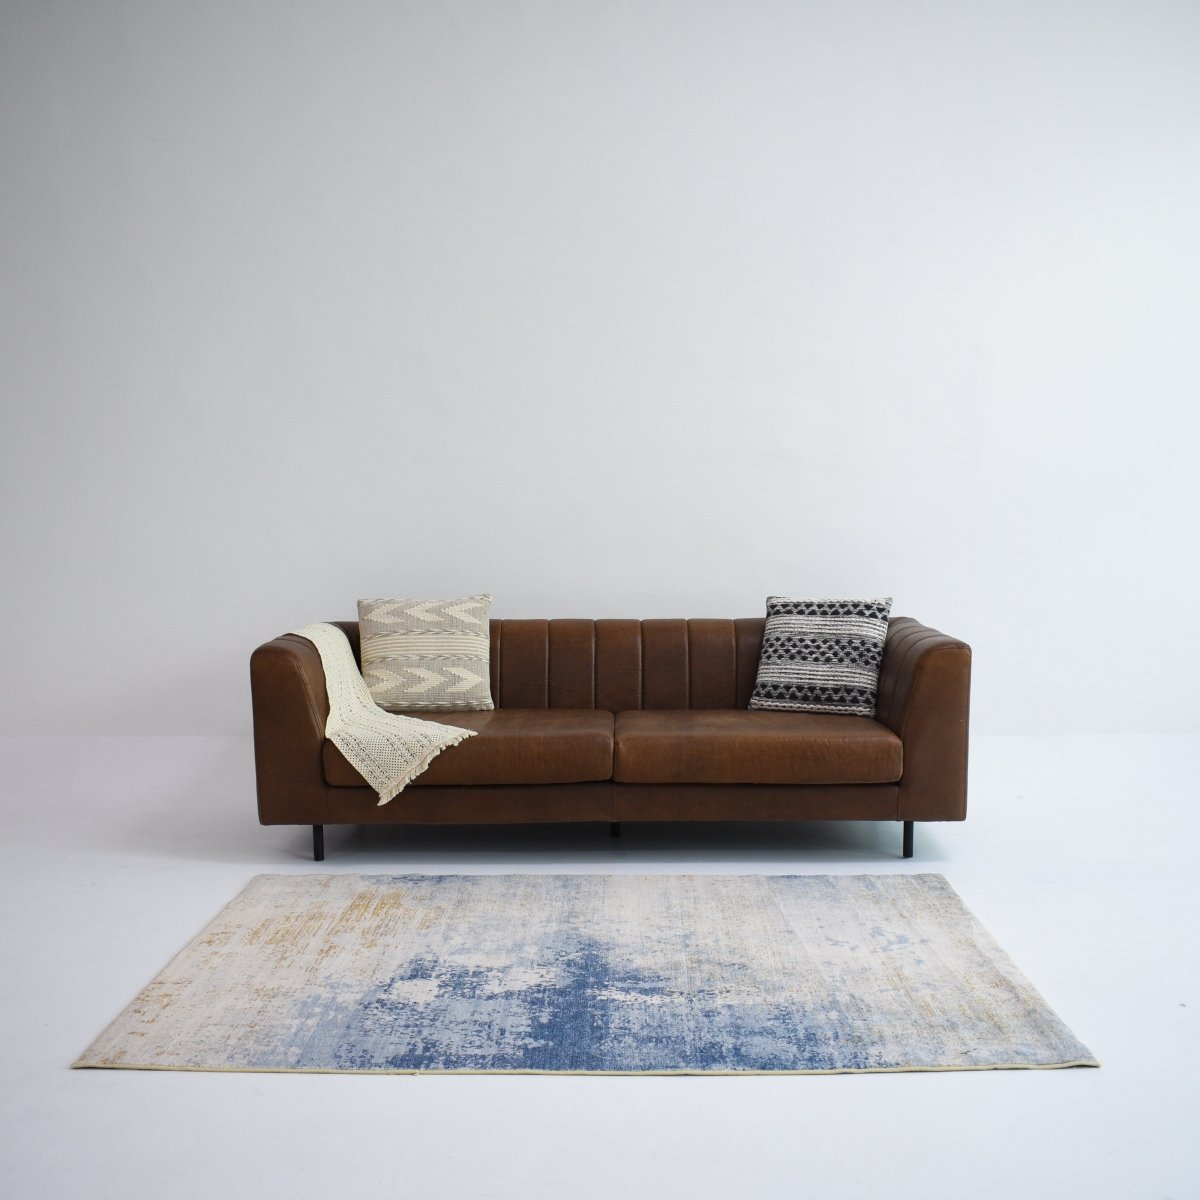 M-2351 Modern Carpet | Polyfibre Cashmere Series - The Carpetier™